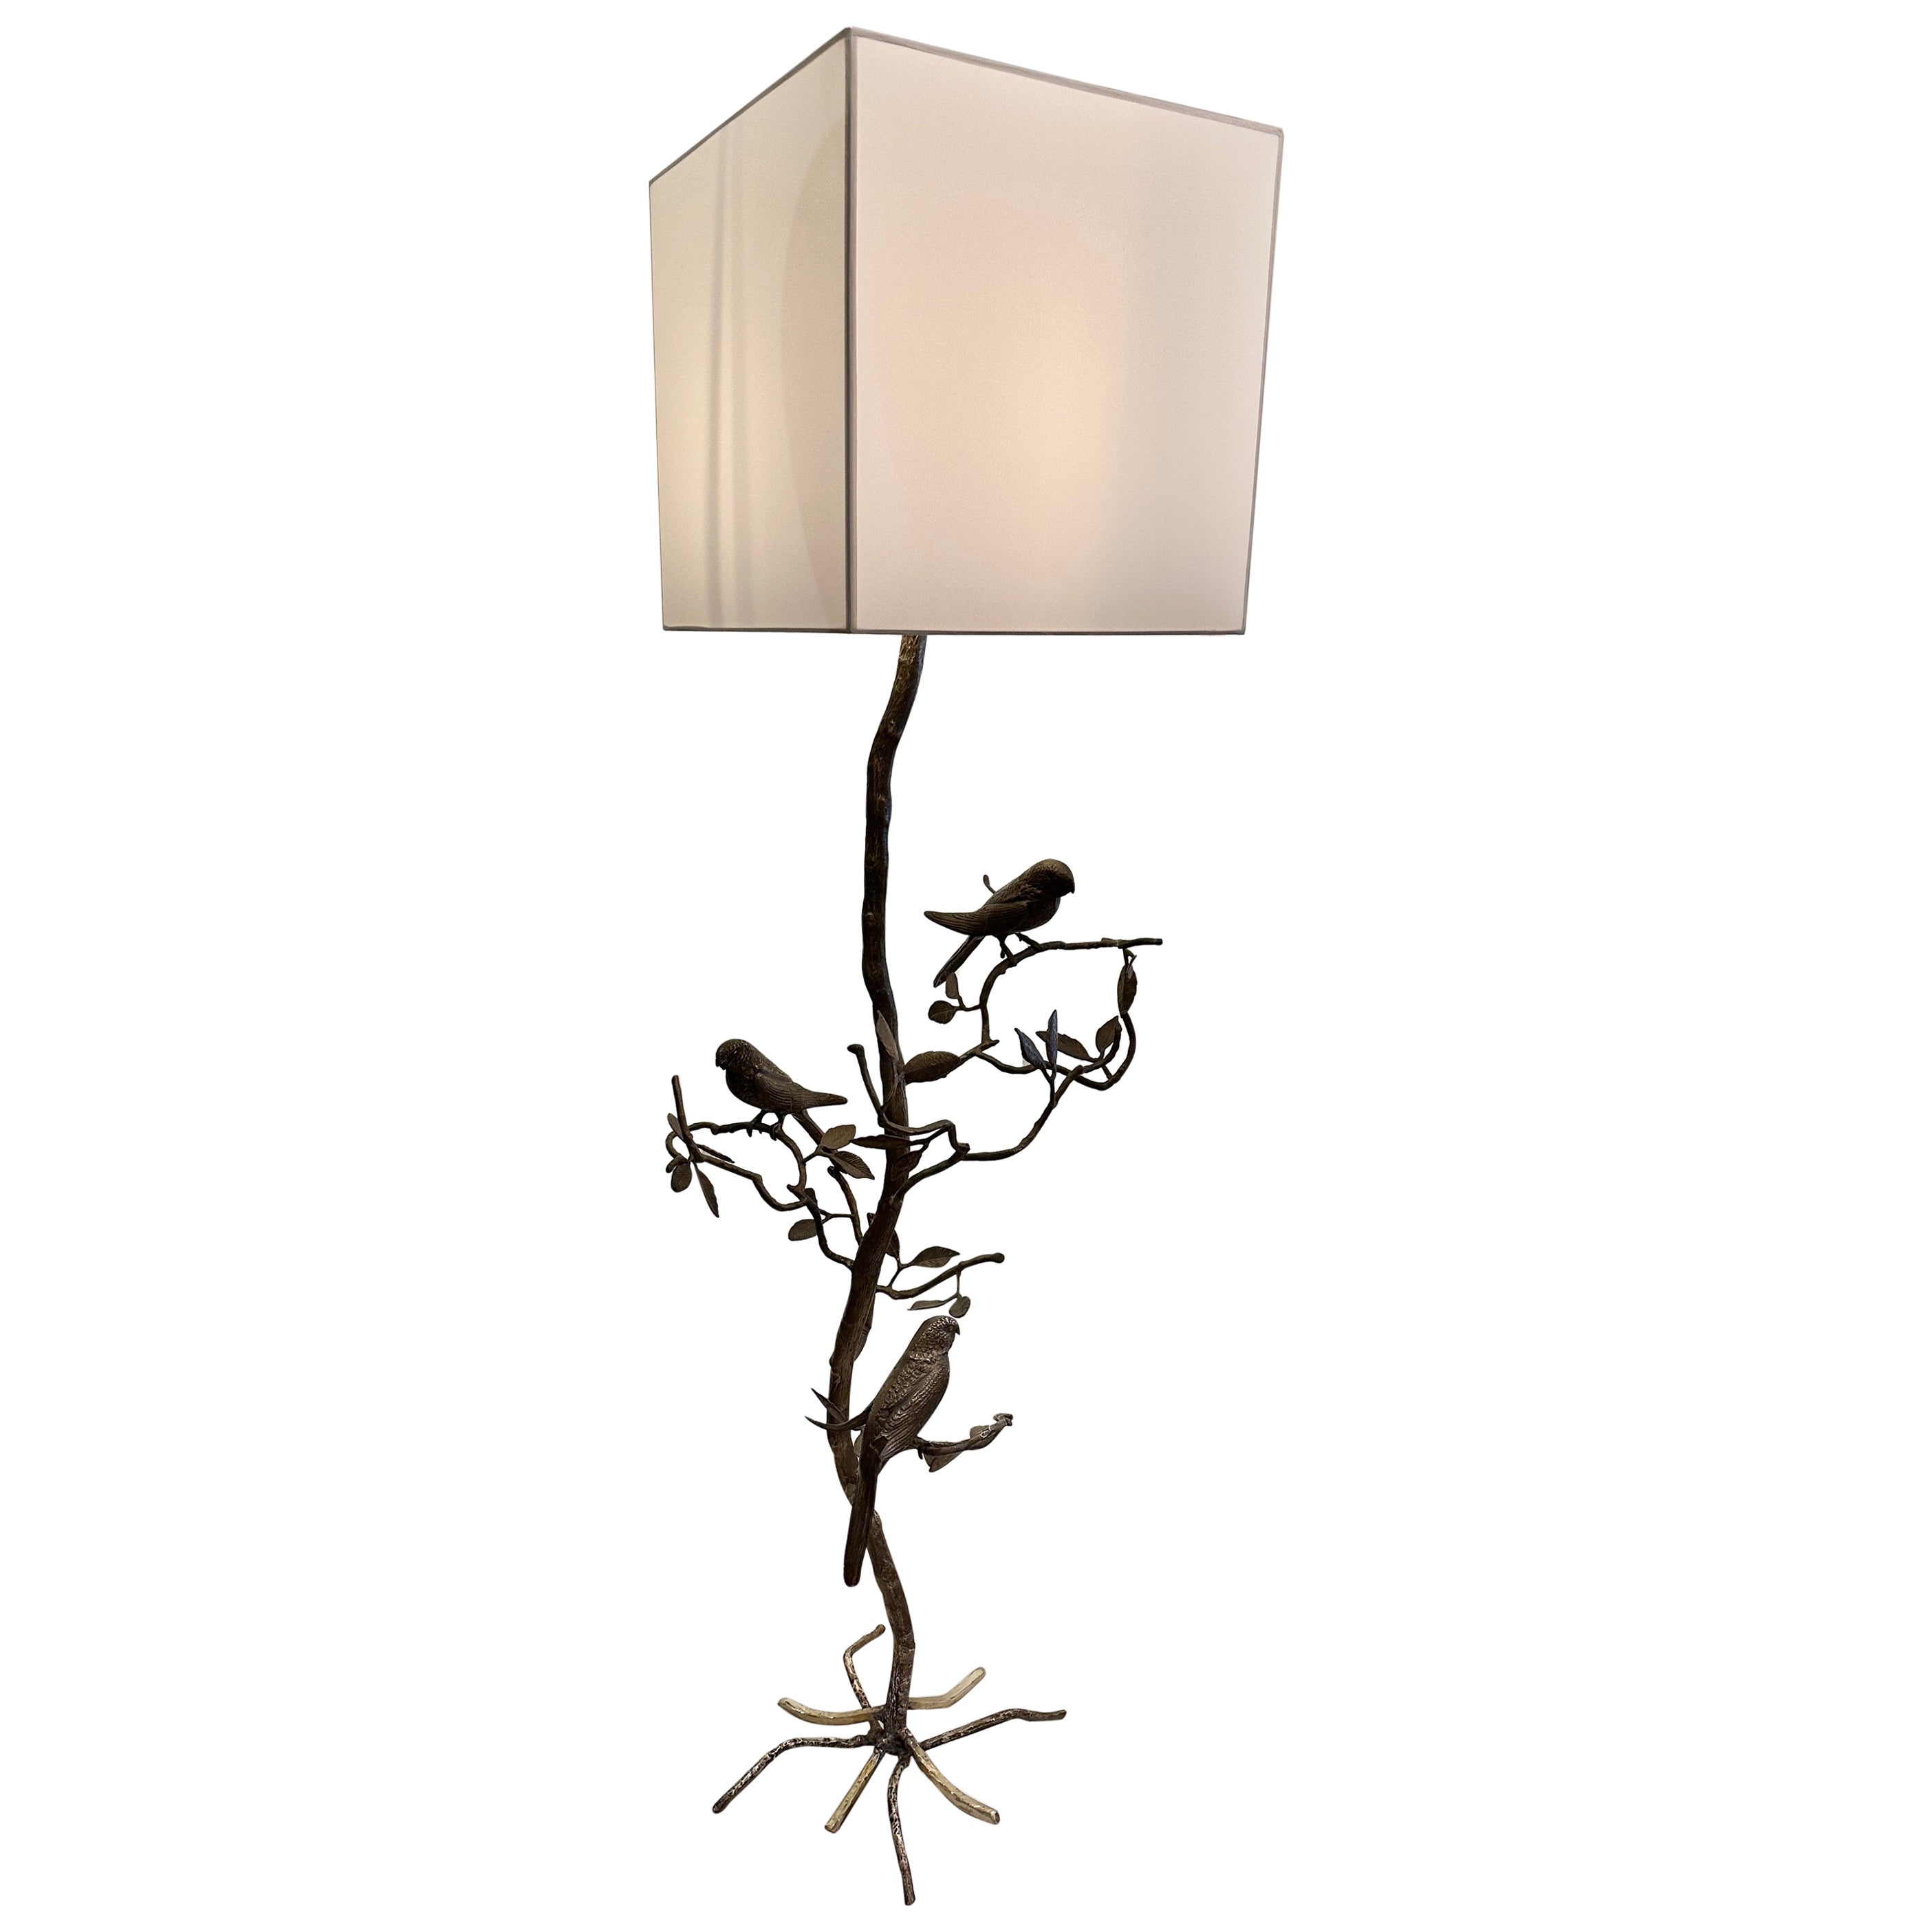 Vintage Bronze Floor Lamp with Parrots on Tree